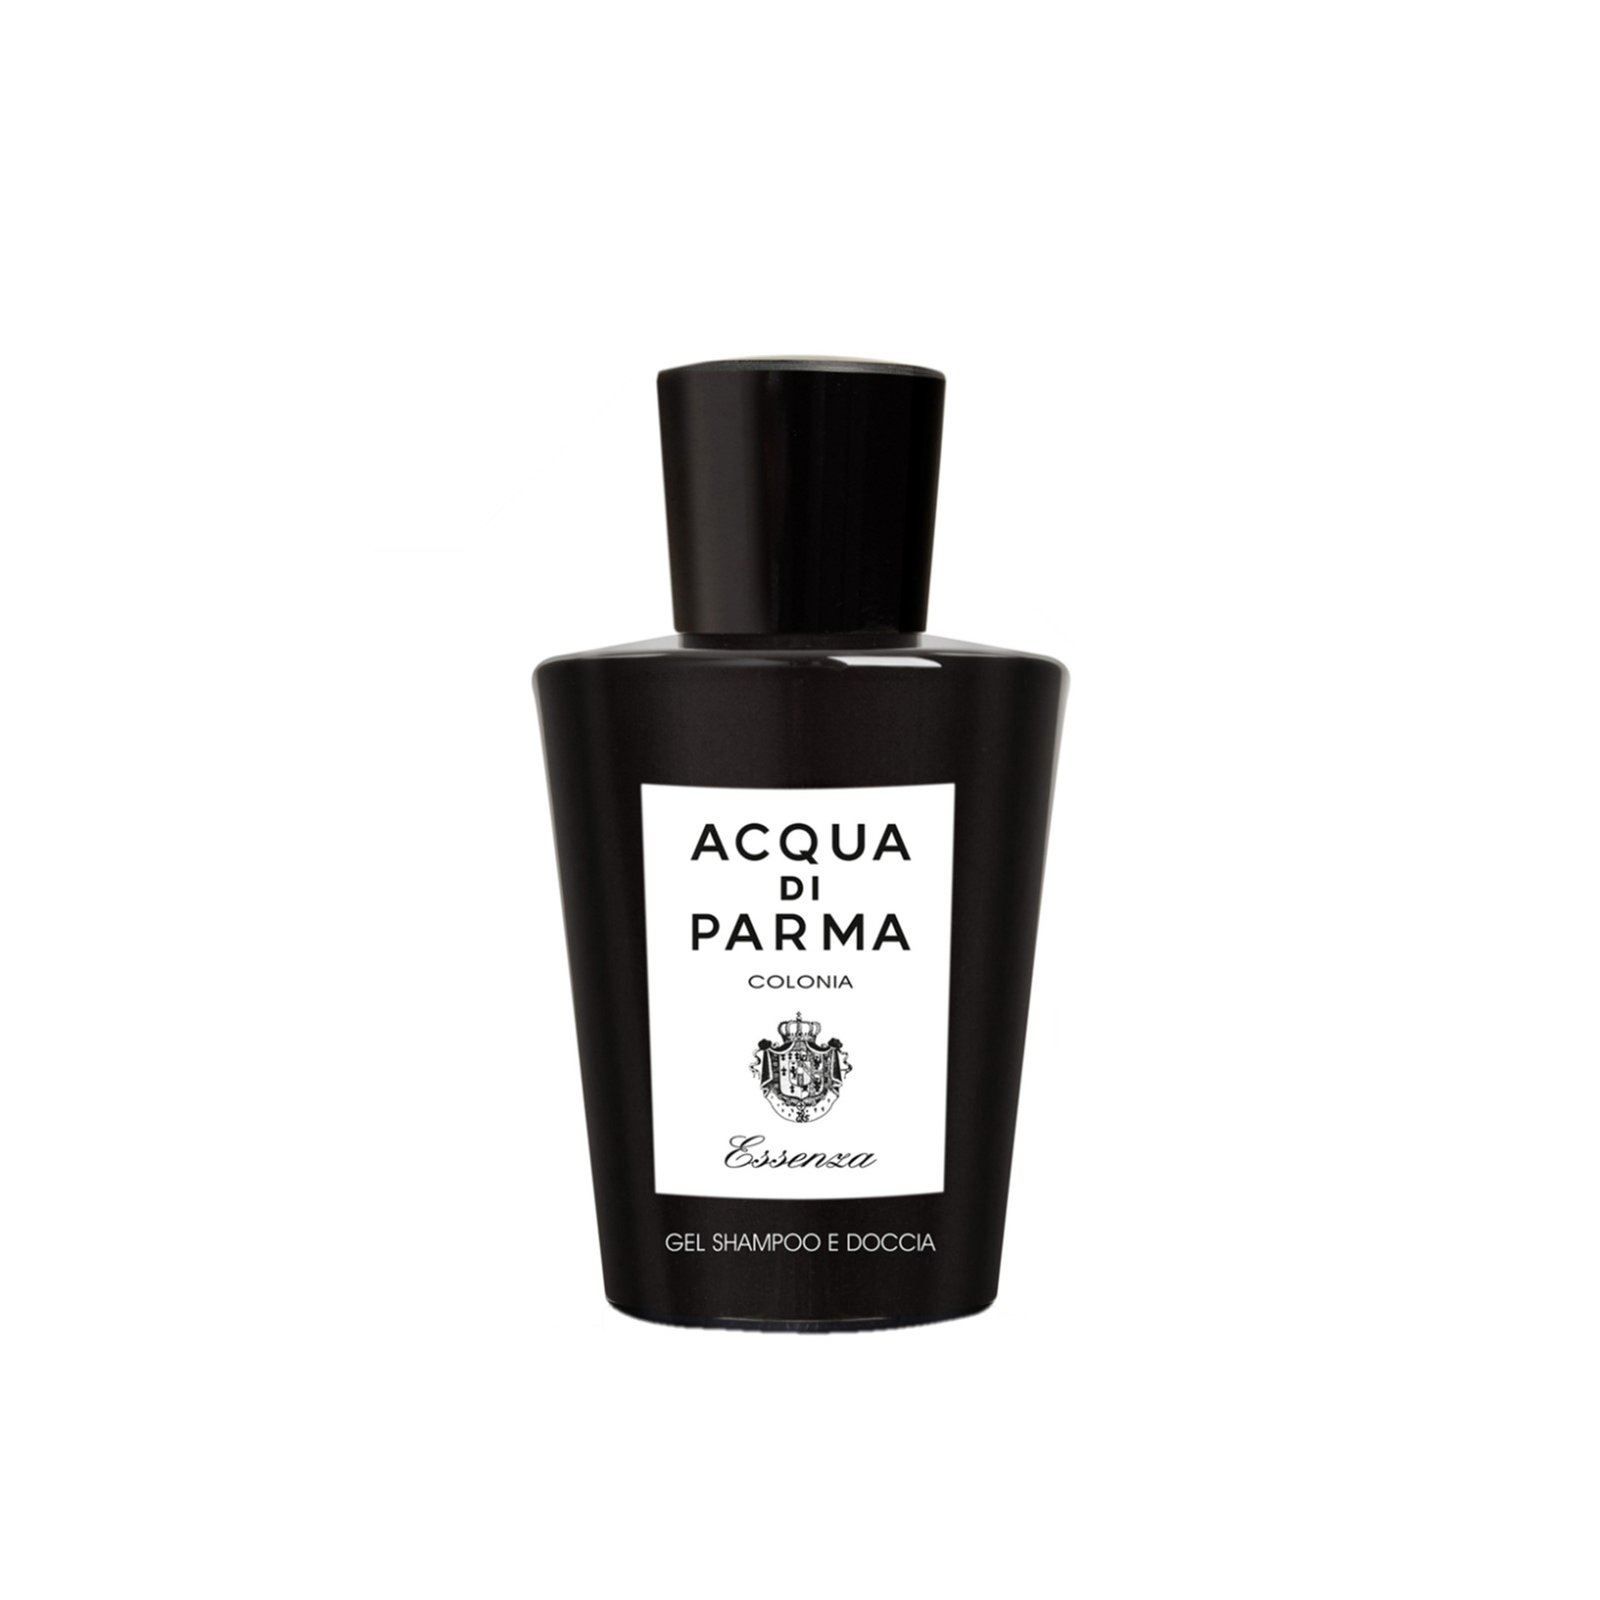 Acqua Di Parma Colonia Essenza Hair And Shower Gel 200ml (6.7 fl oz)